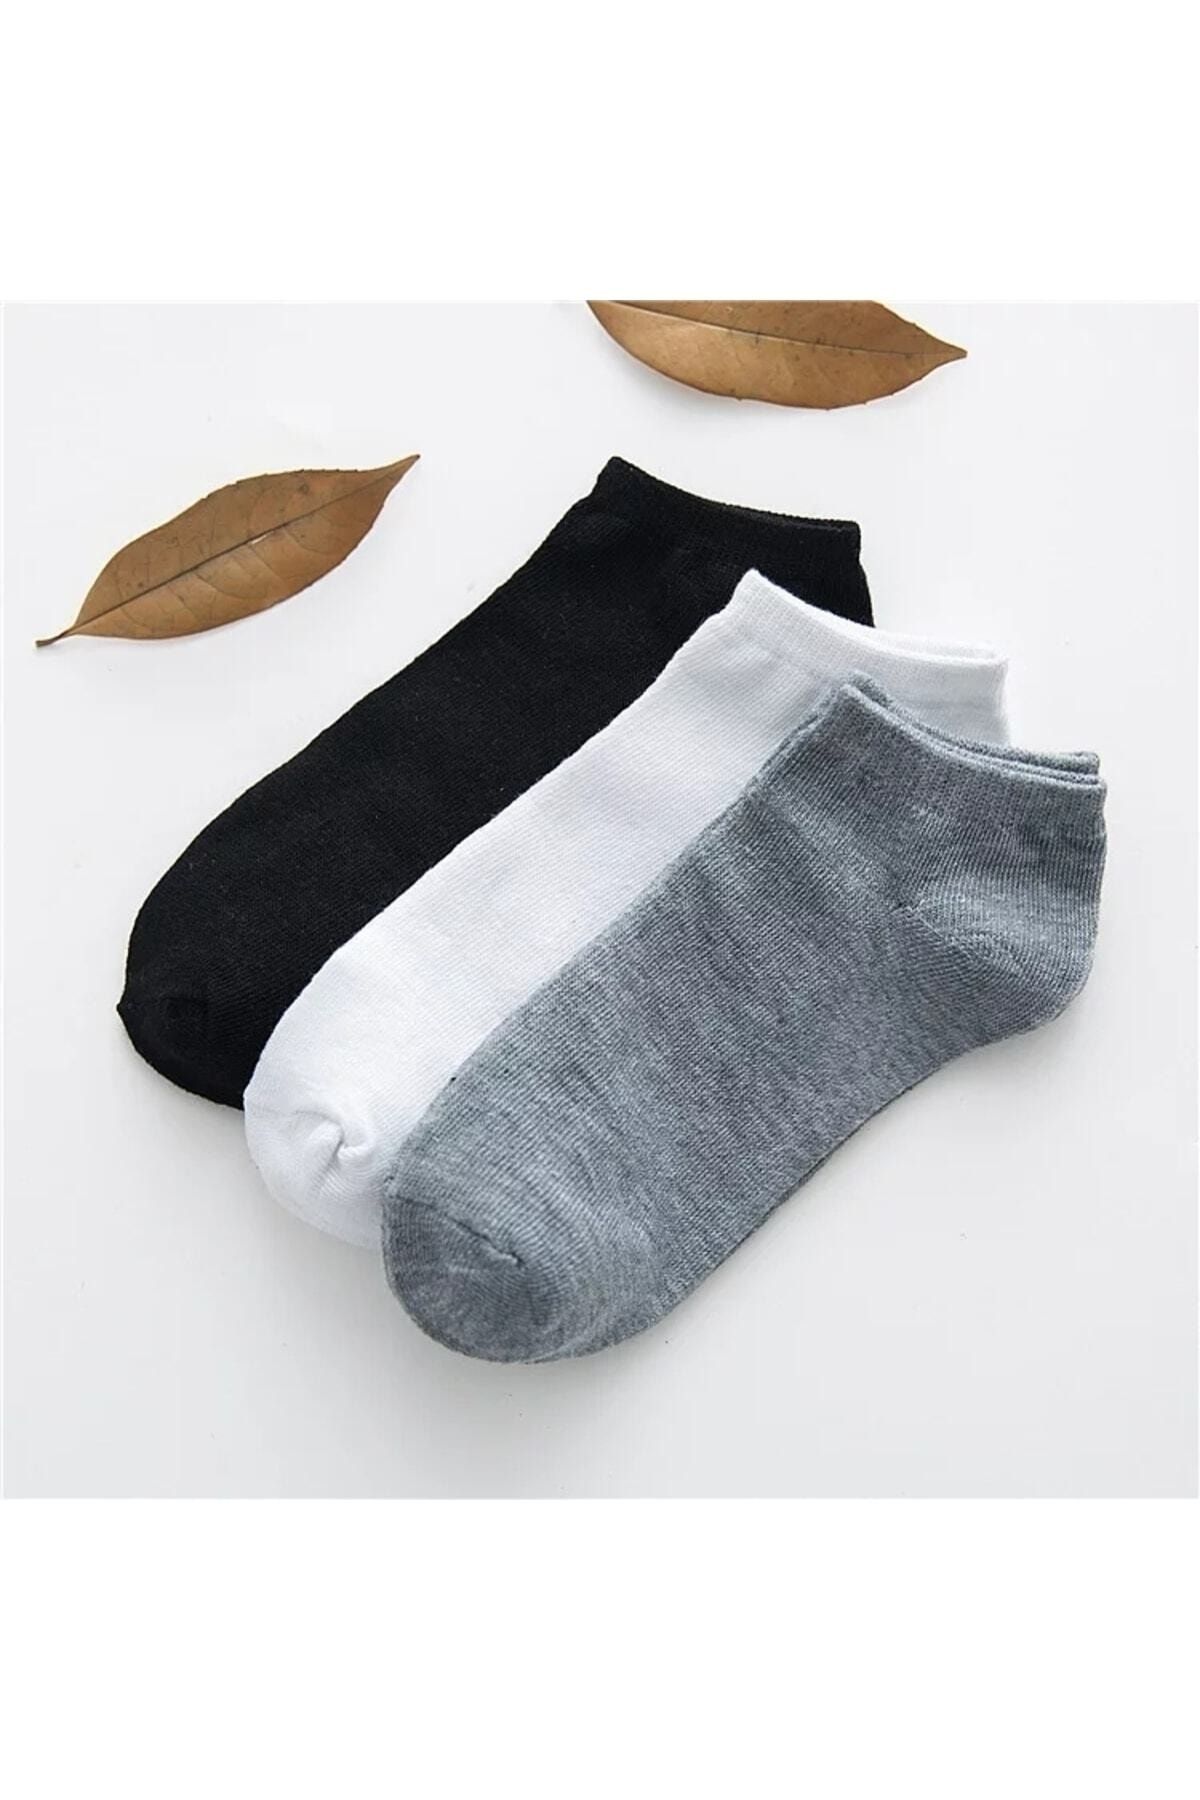 Önder 3 Çift Siyah Beyaz Gri Bilek Çorap